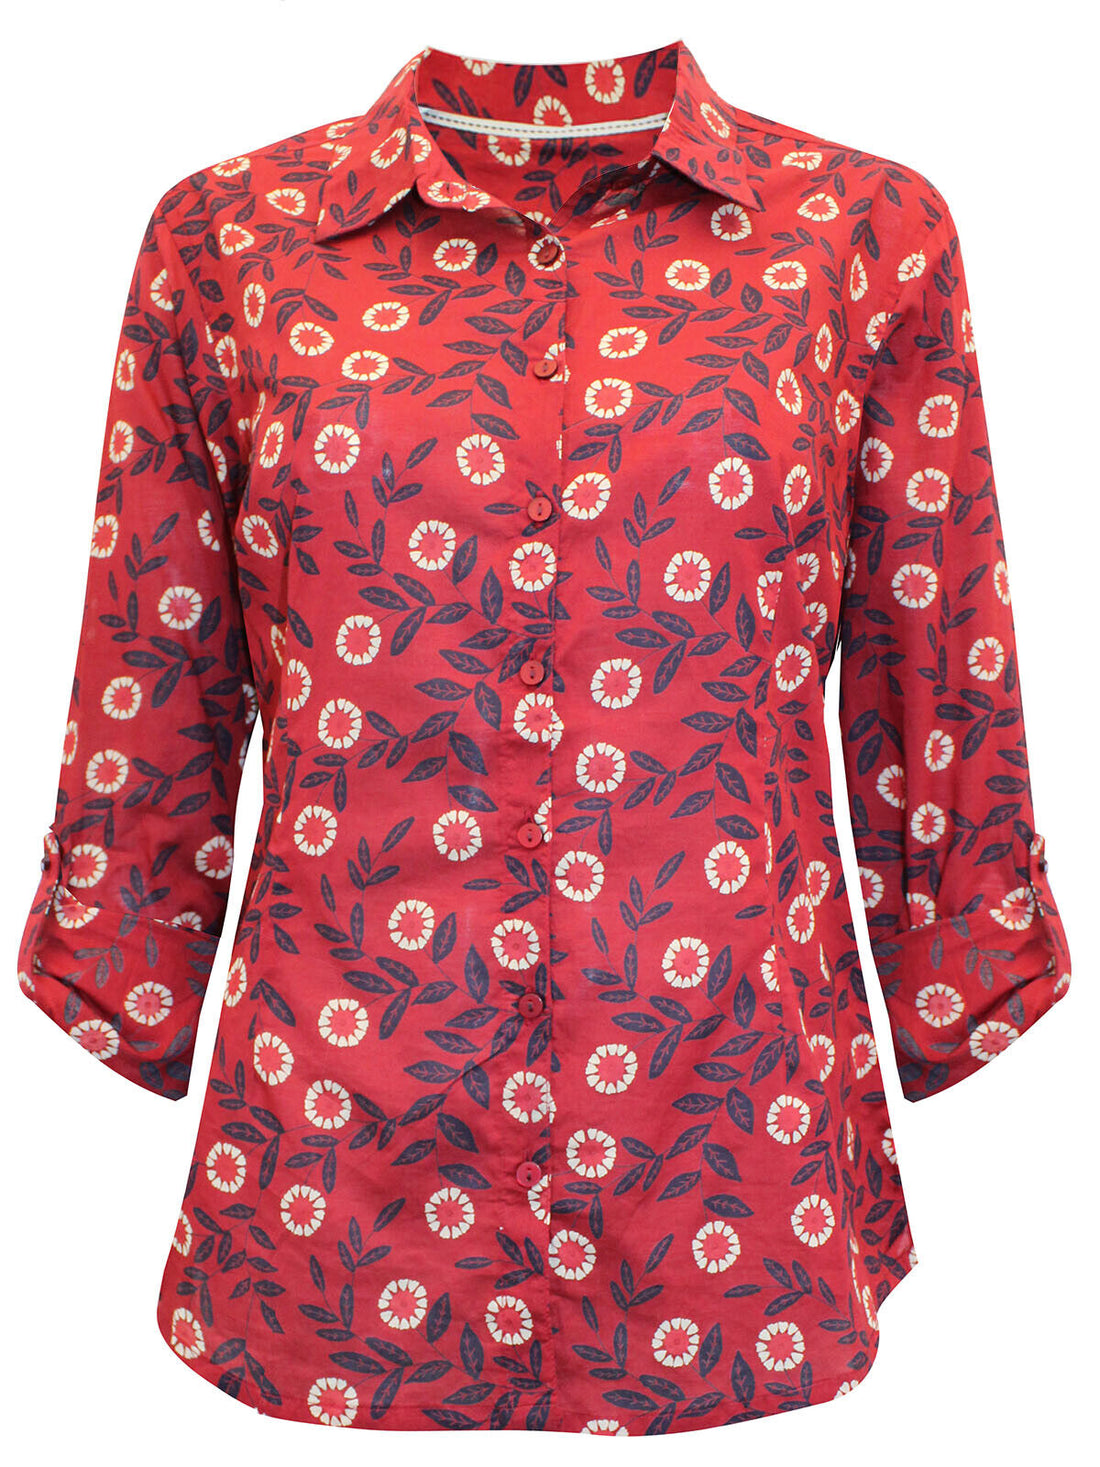 EX Seasalt Foliage Bloom Dahlia Larissa Organic Cotton Shirt Sizes 8-28 RRP £45